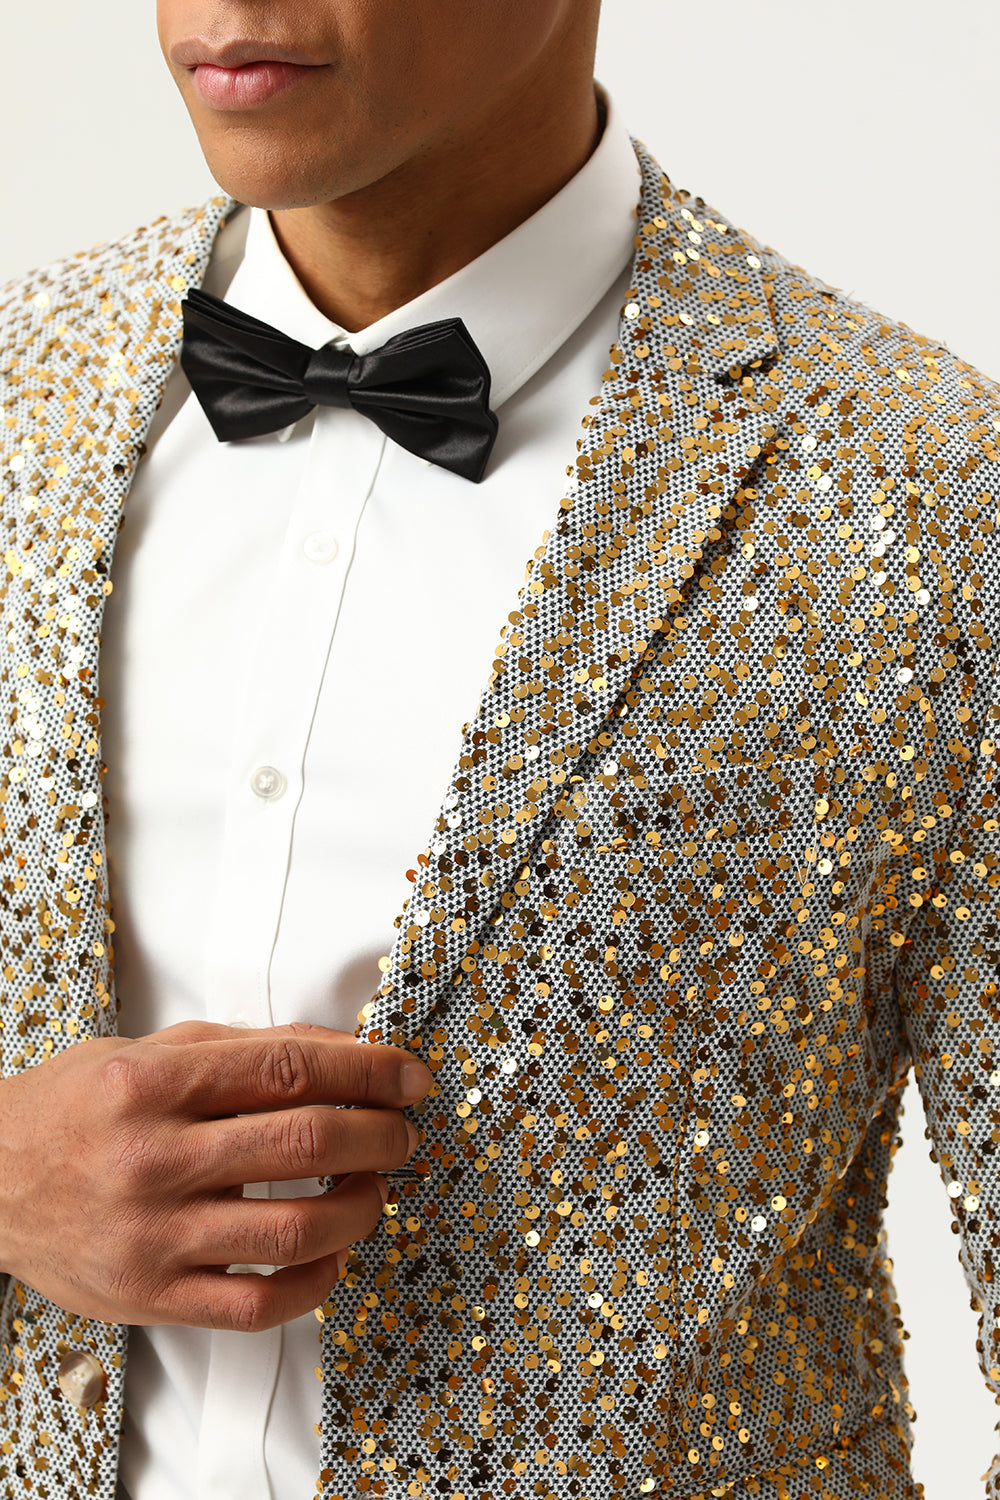 Sparkly Champagne Sequins Notched Lapel Men's Prom Blazer